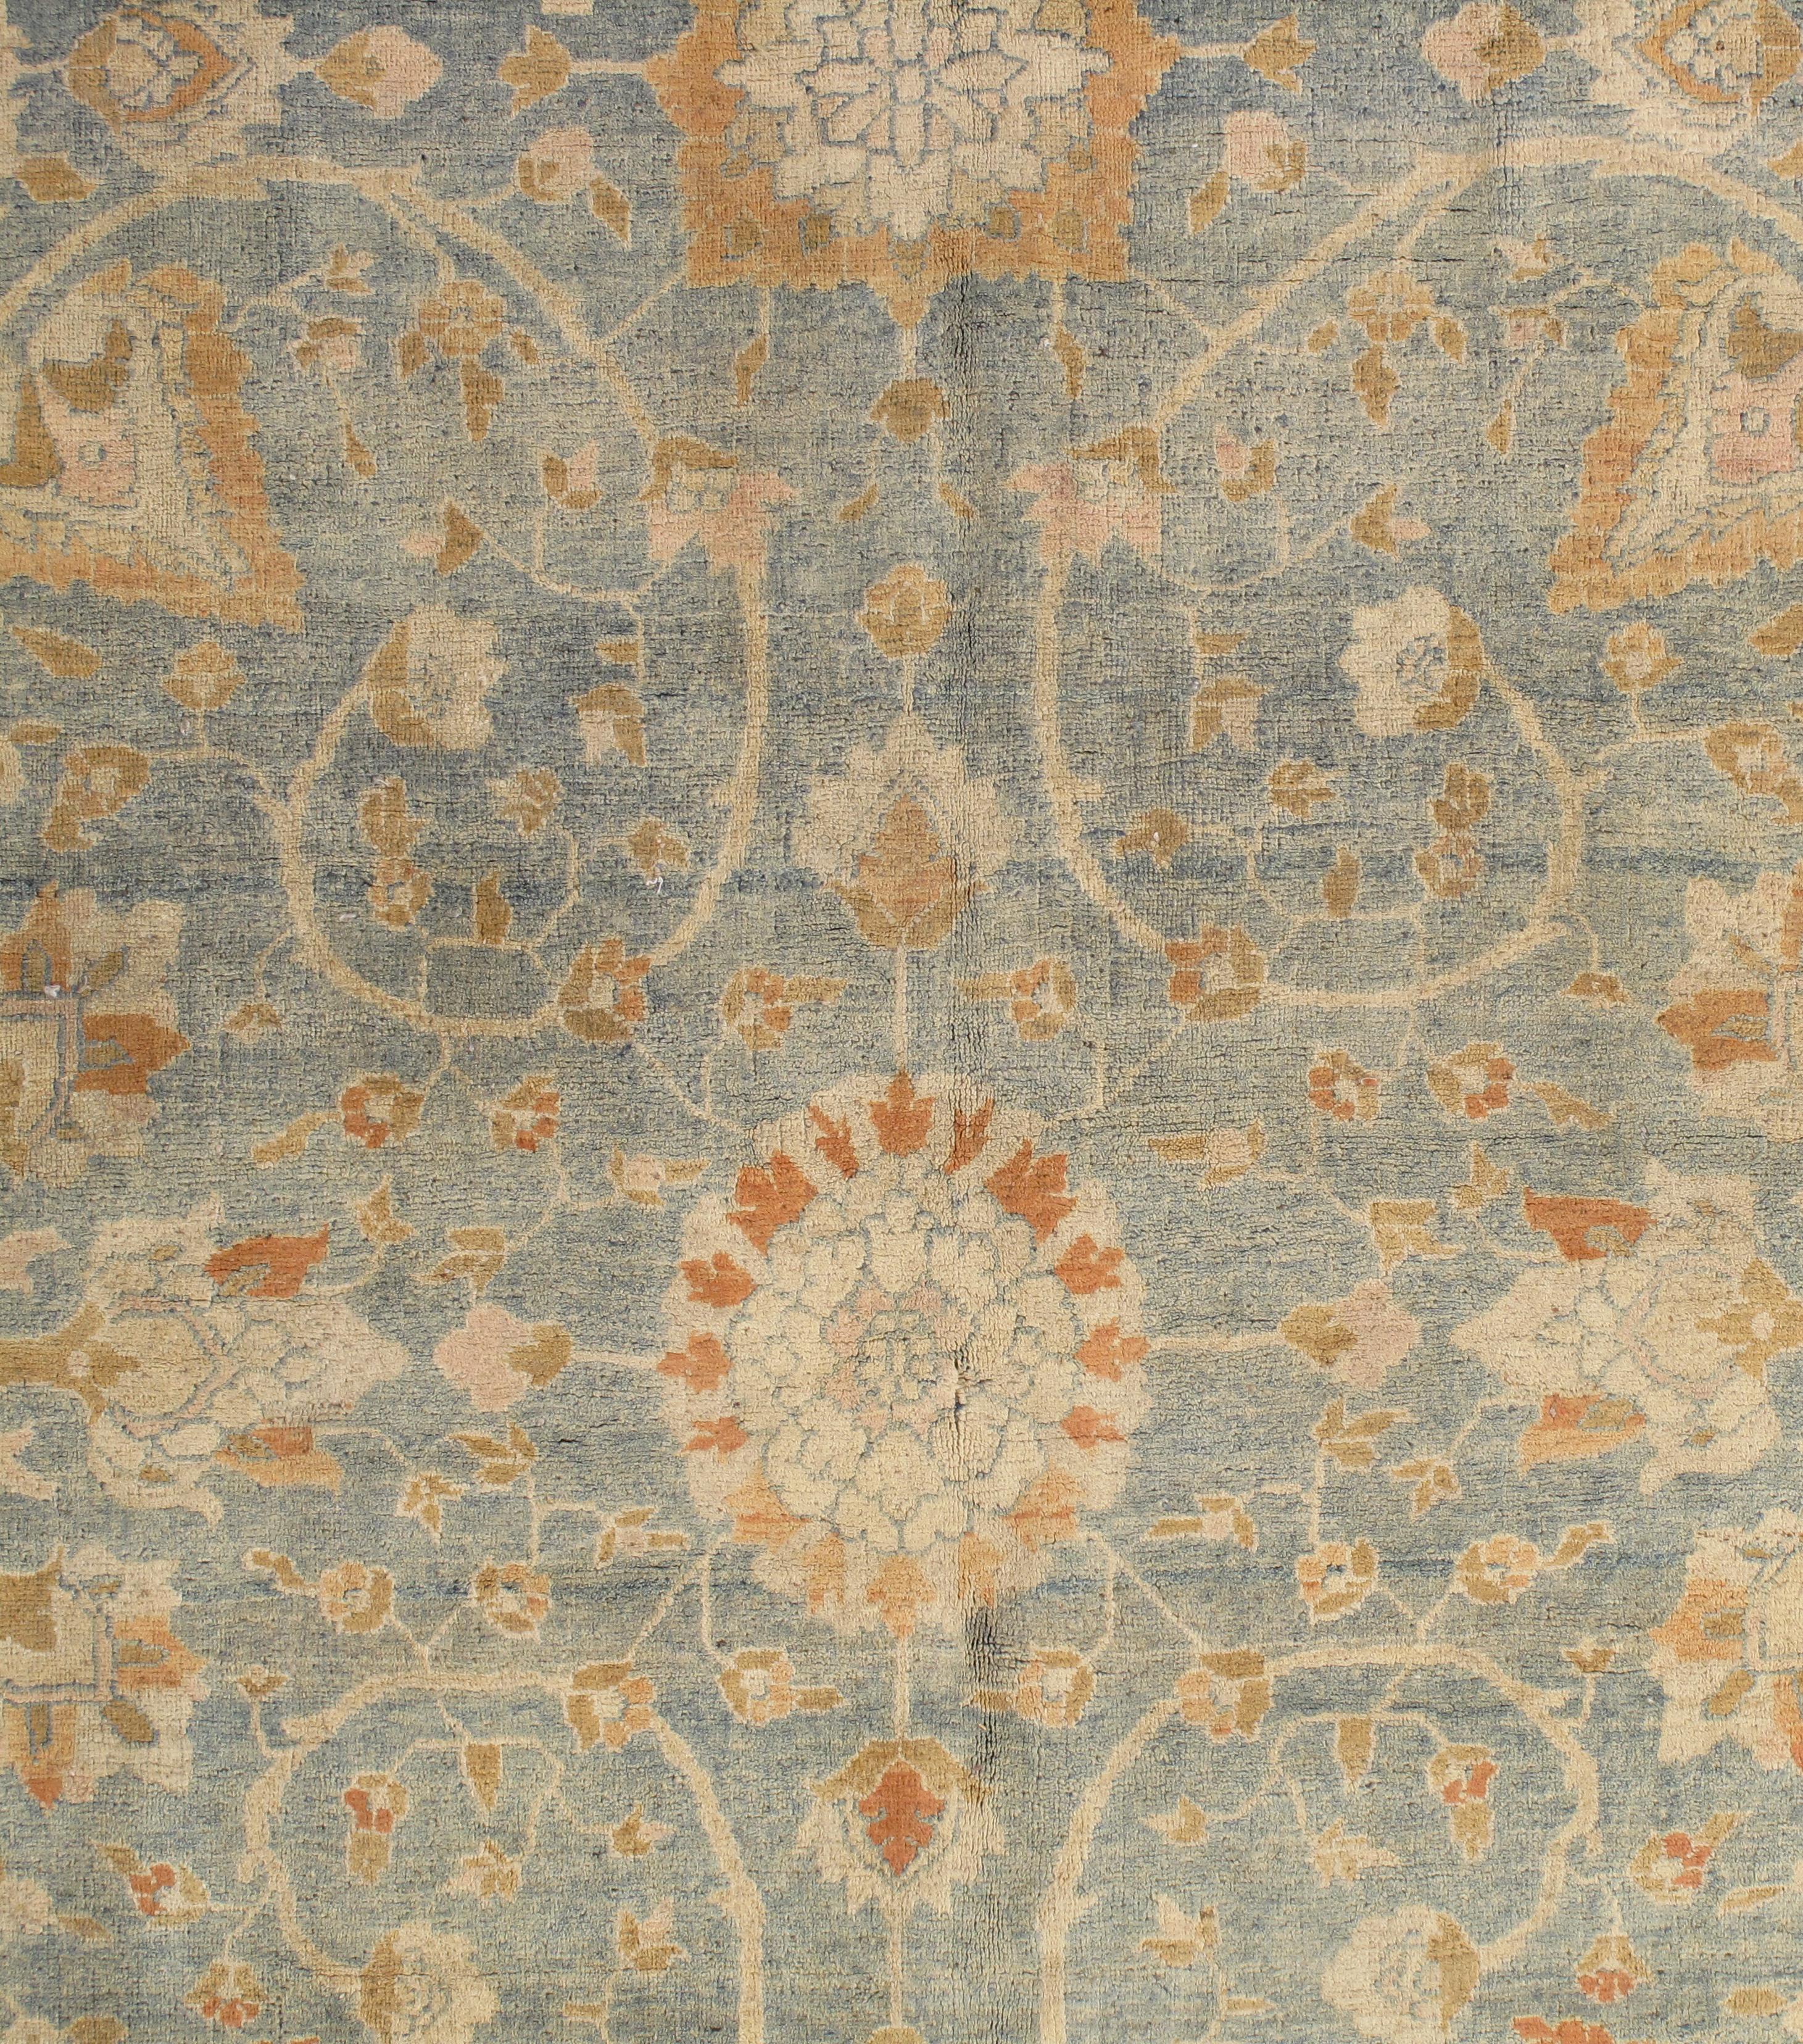 Persian Antique Tabriz Carpet, Handmade Carpet, Light Blue, Soft Saffron and Ivory For Sale